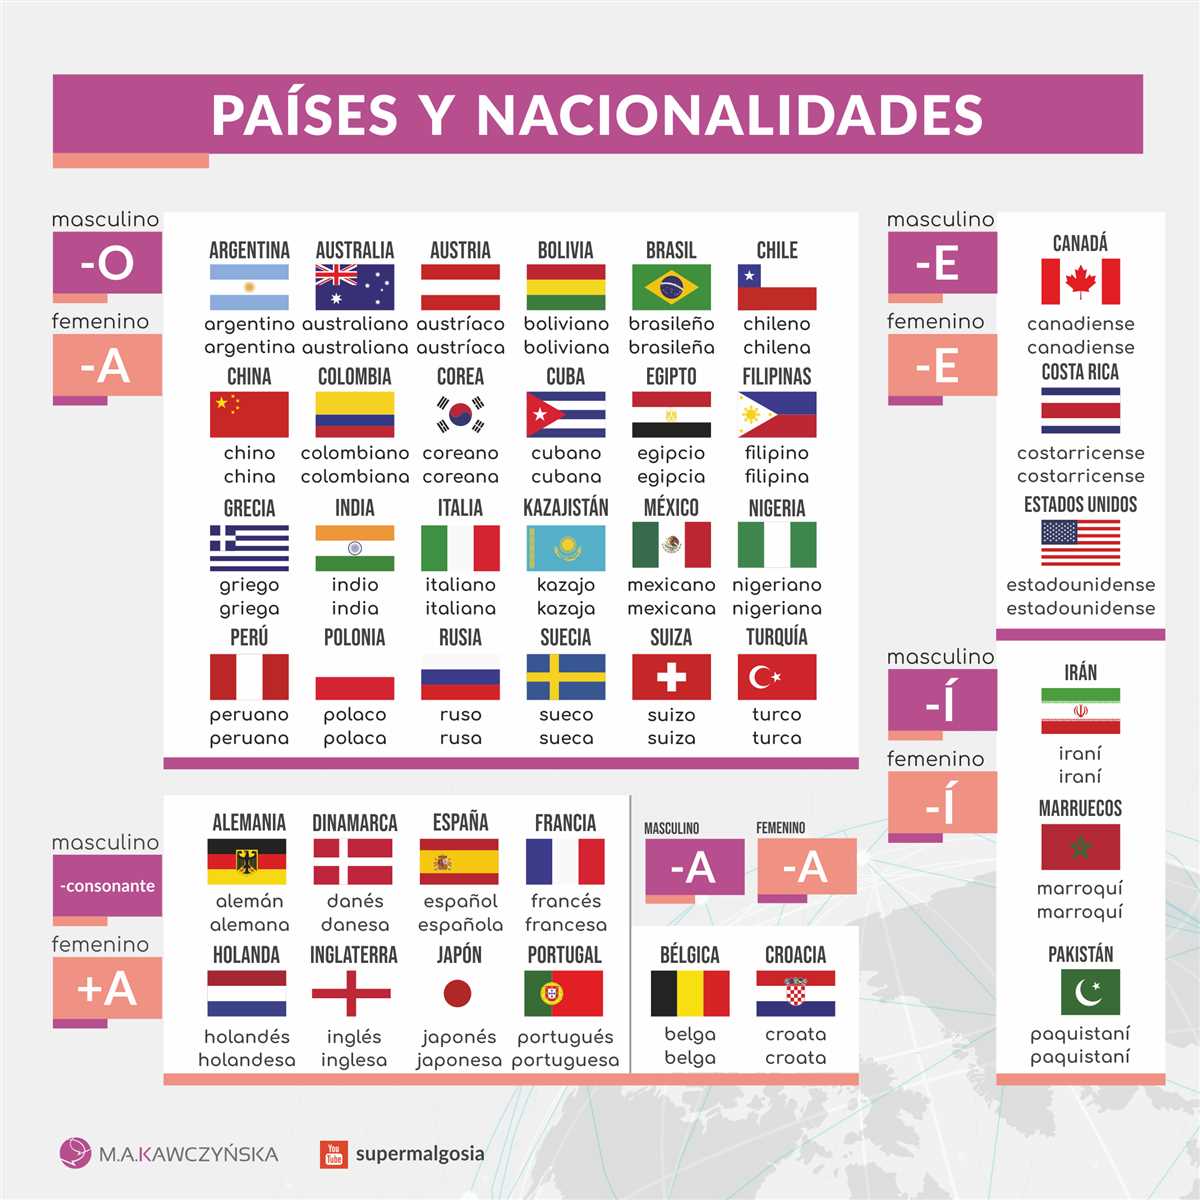 Exploring common nationalities in the Spanish-speaking world